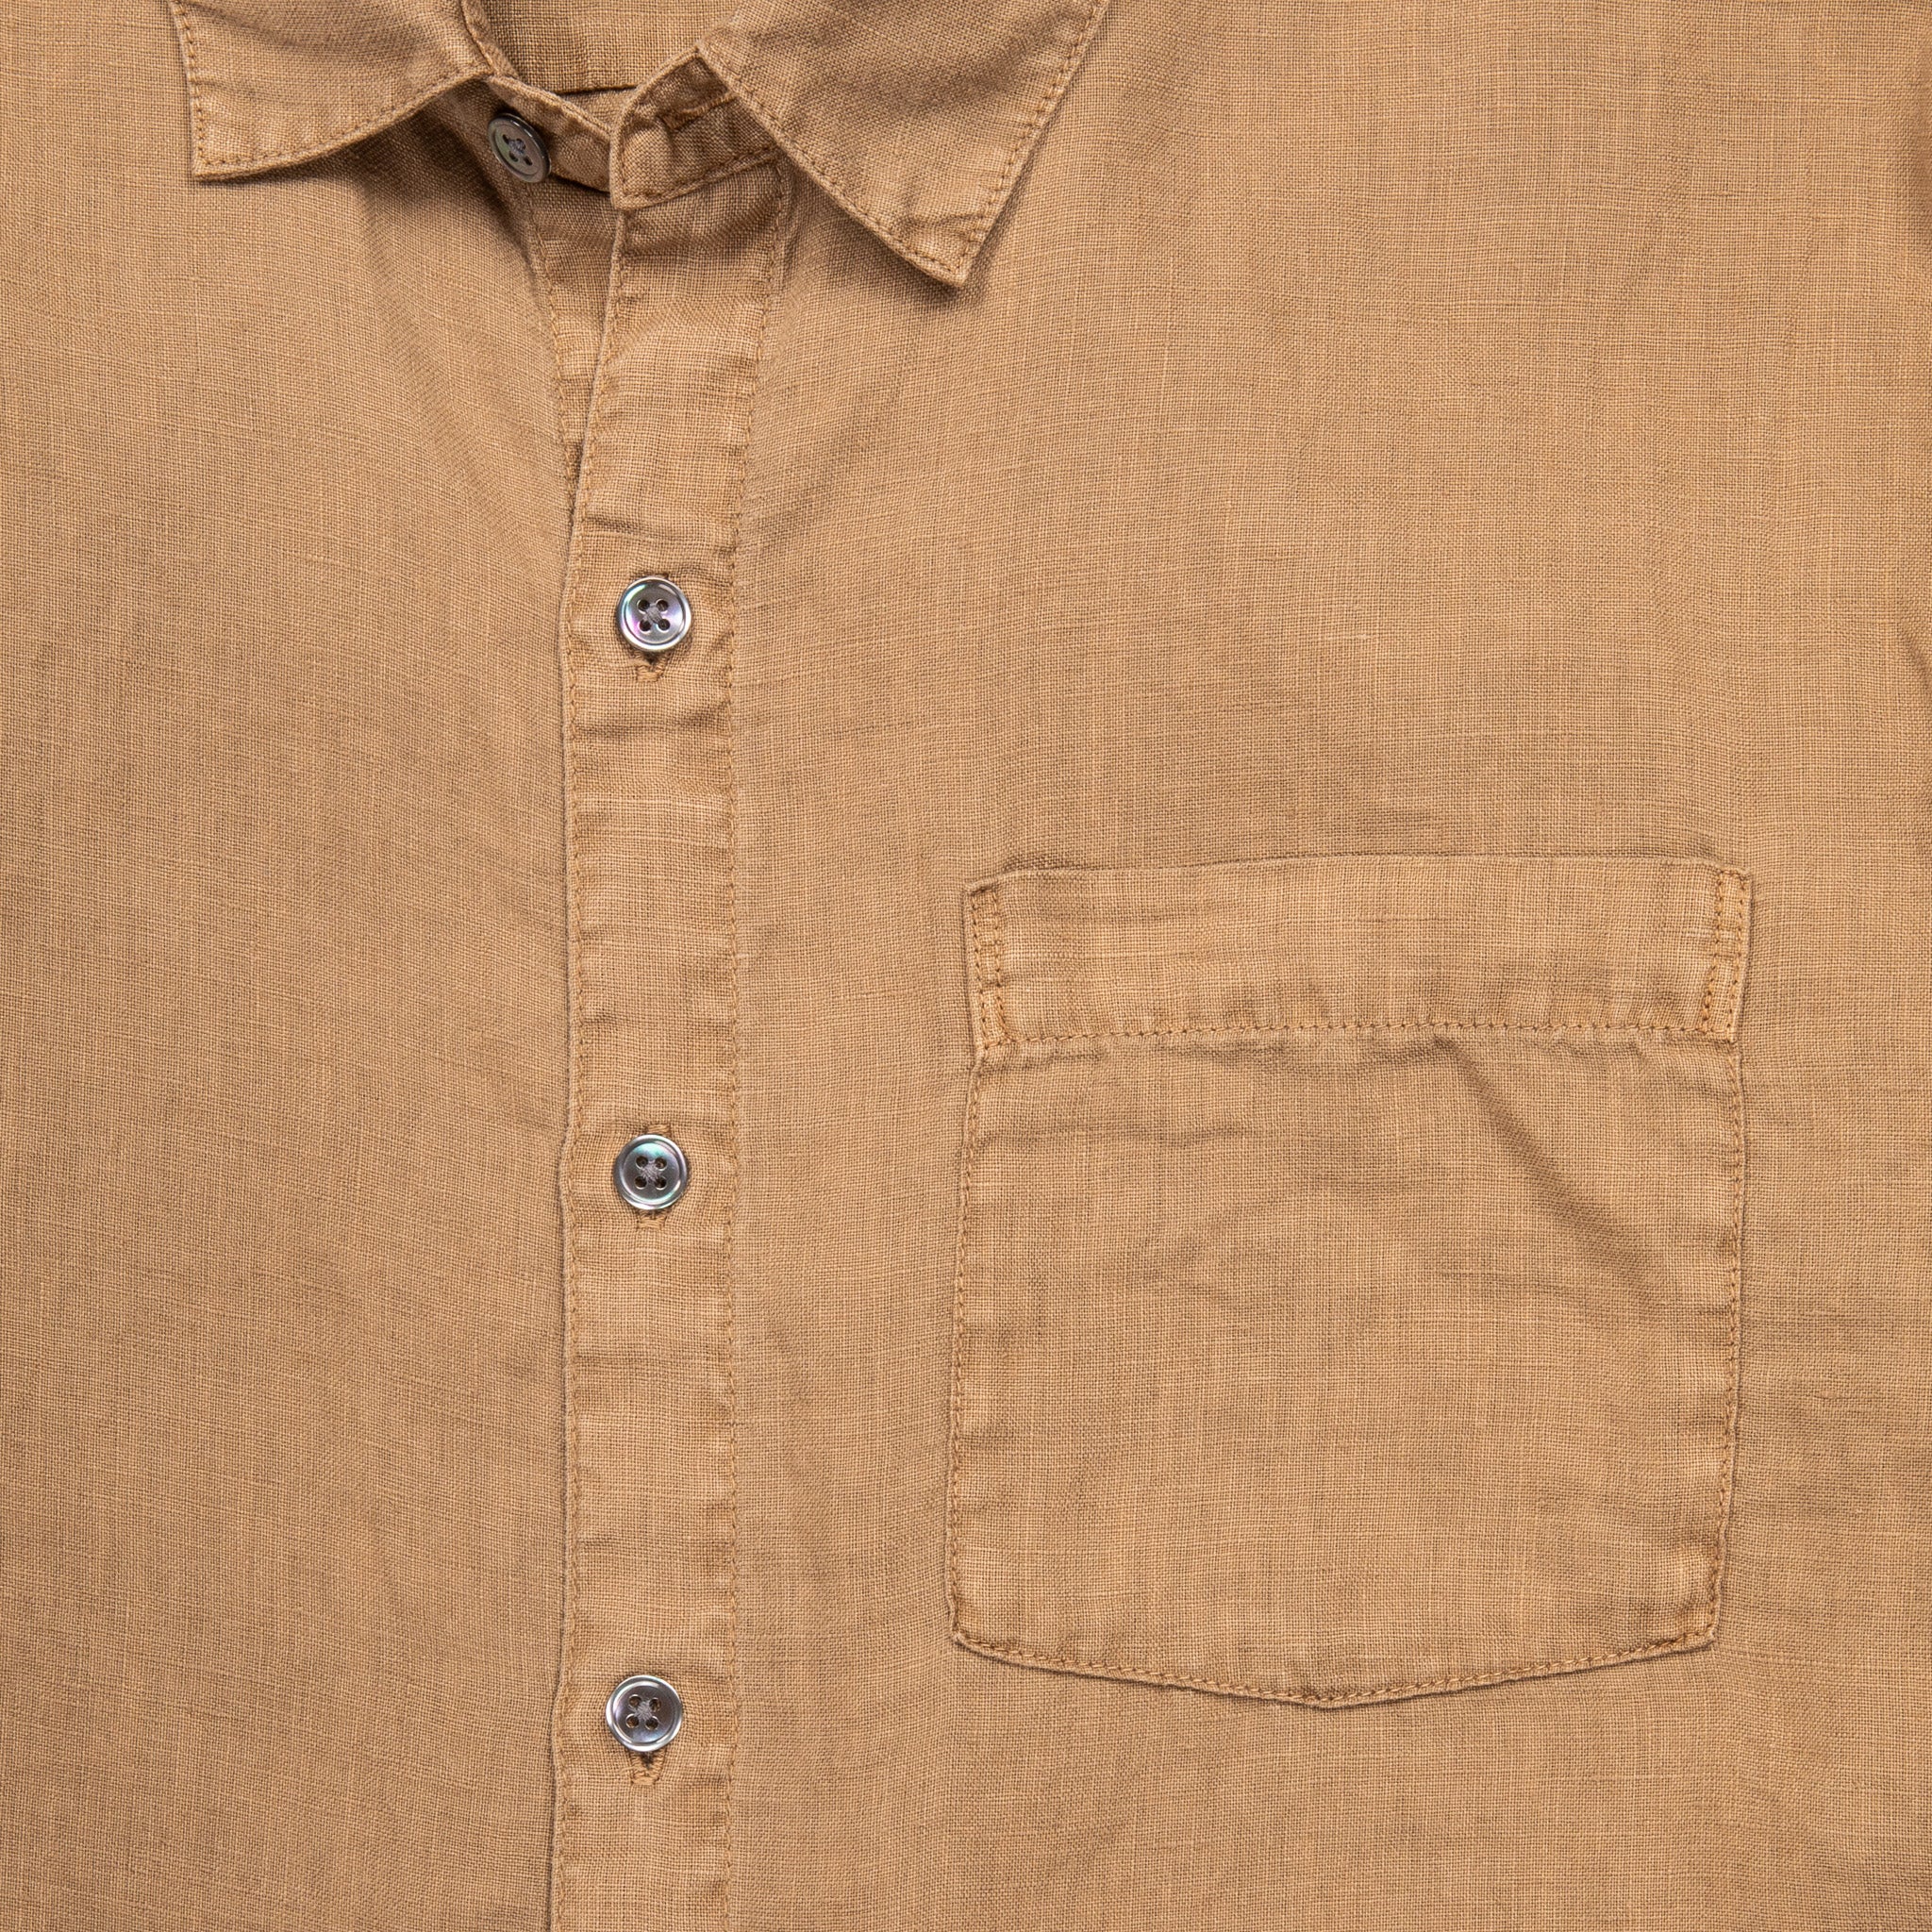 James Perse Classic Linen shirt Cashew